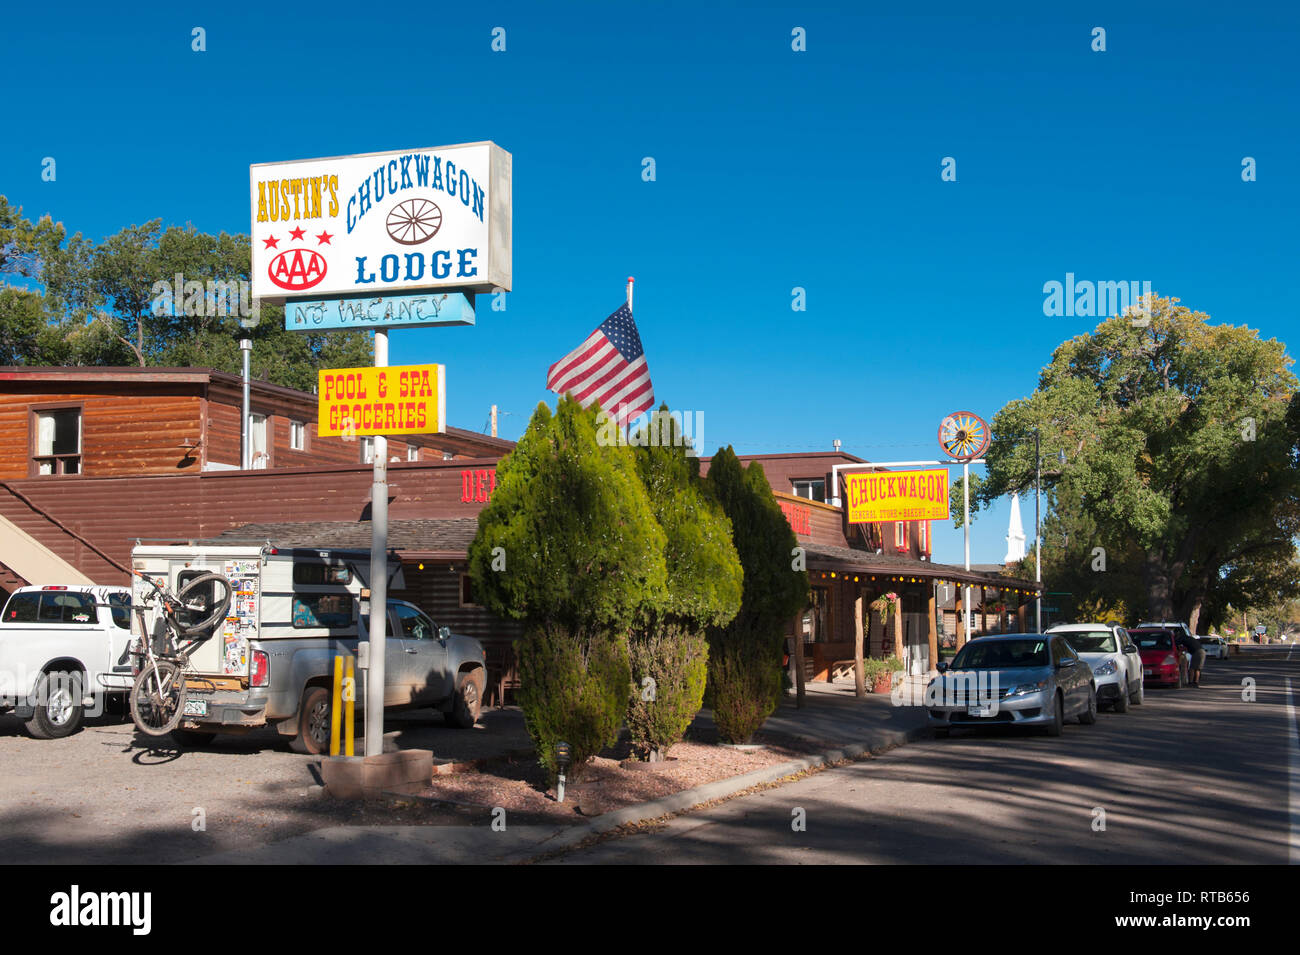 Austin's Chuckwagon Lodge, a motel in Torrey, Utah, USA. Stock Photo